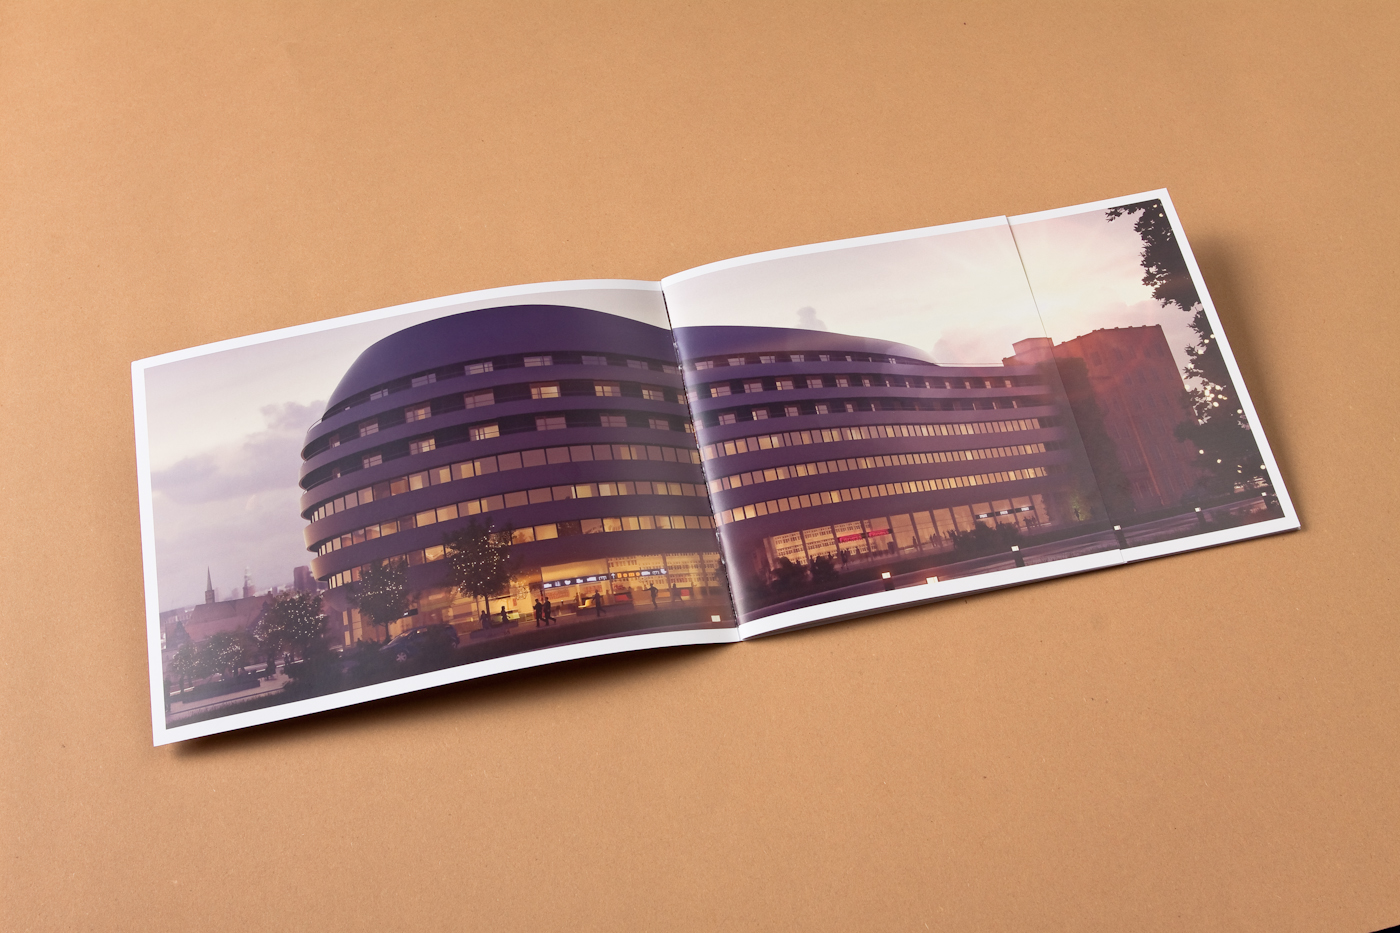 kaplon marcinkowski poland brochure editorial apartments wrocław city design Office hotel penthouses Retail